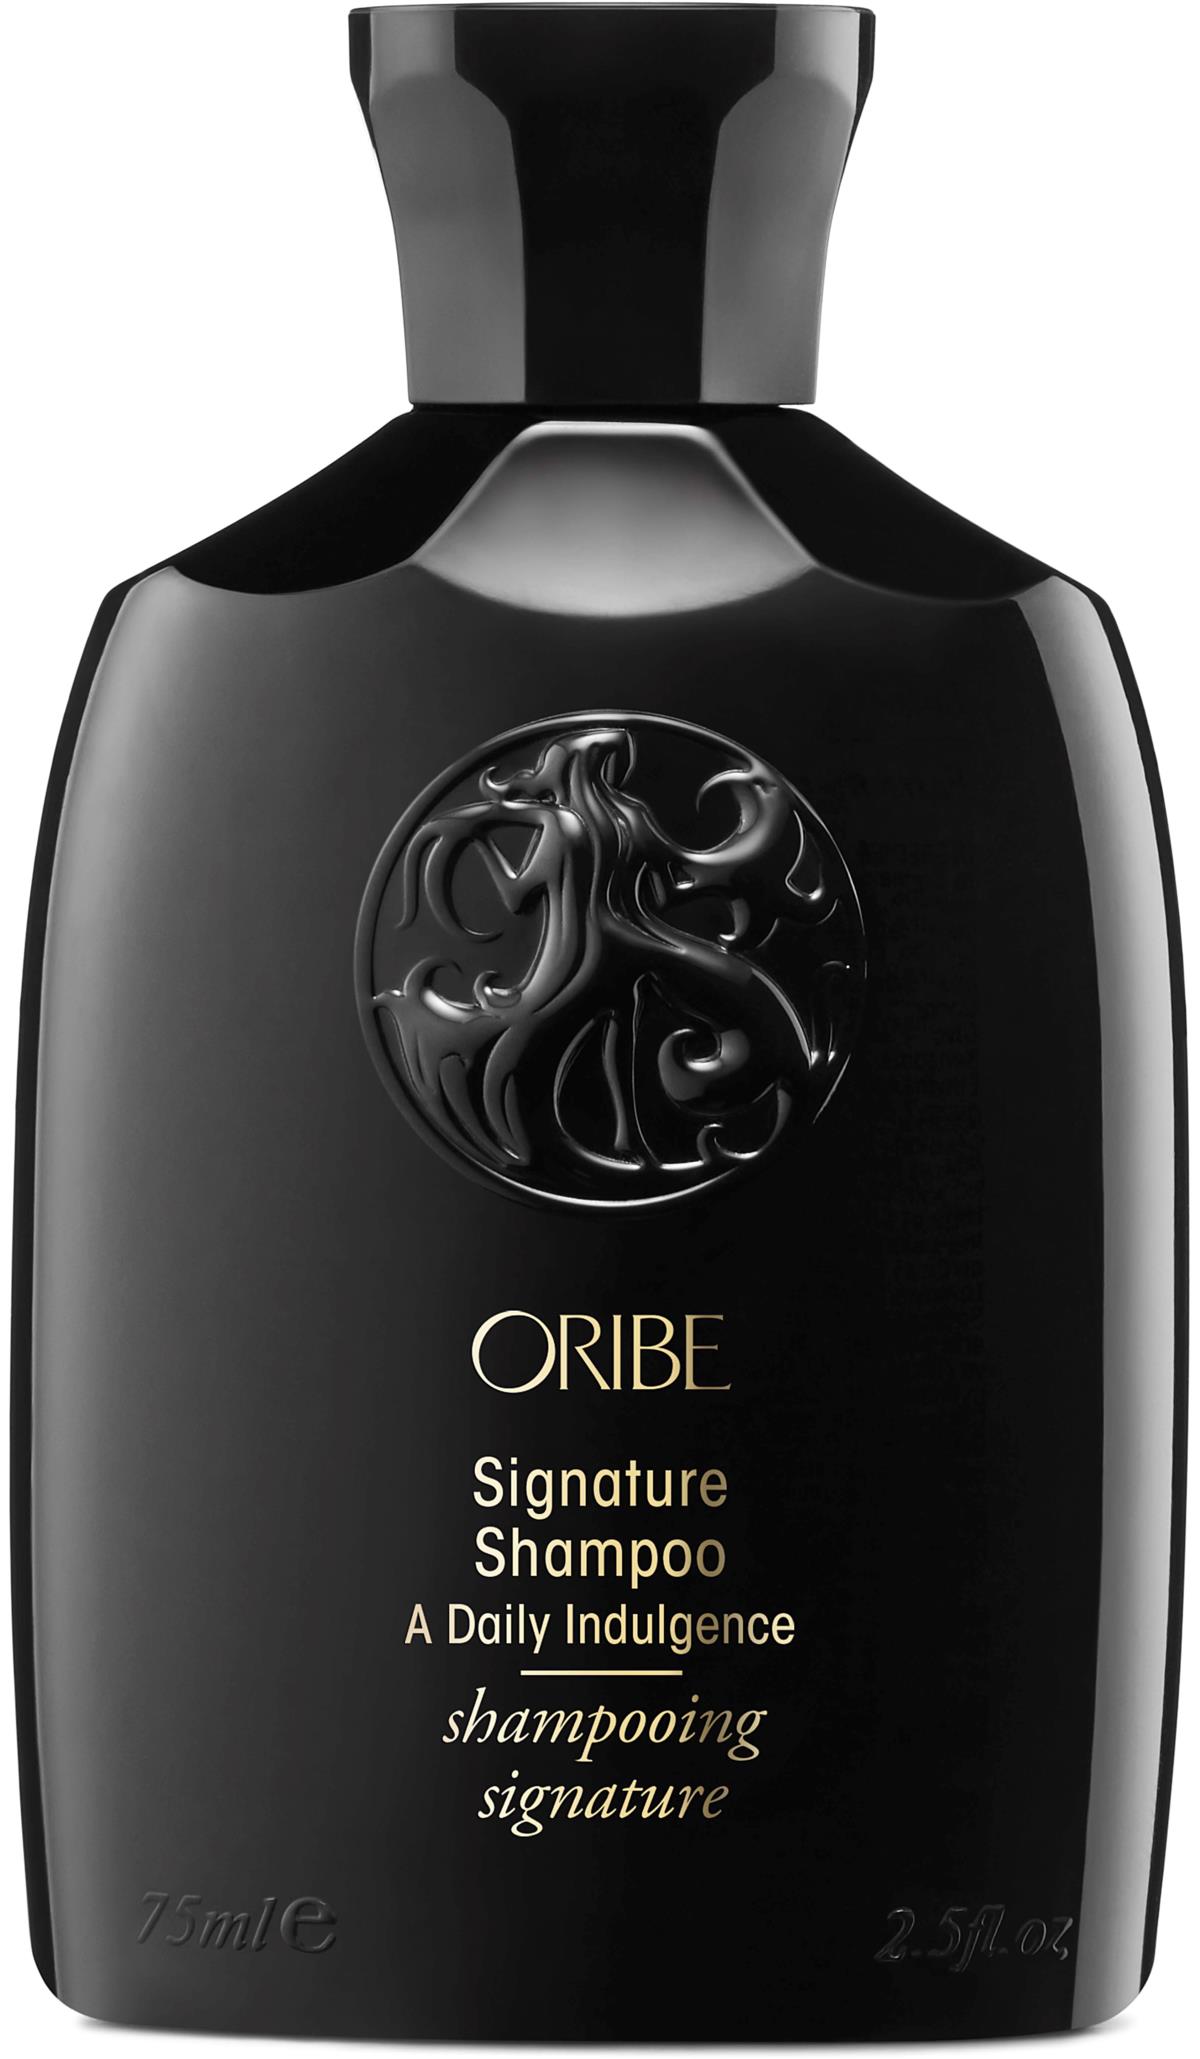 Oribe Signature Travel Signature Shampoo 75 ml